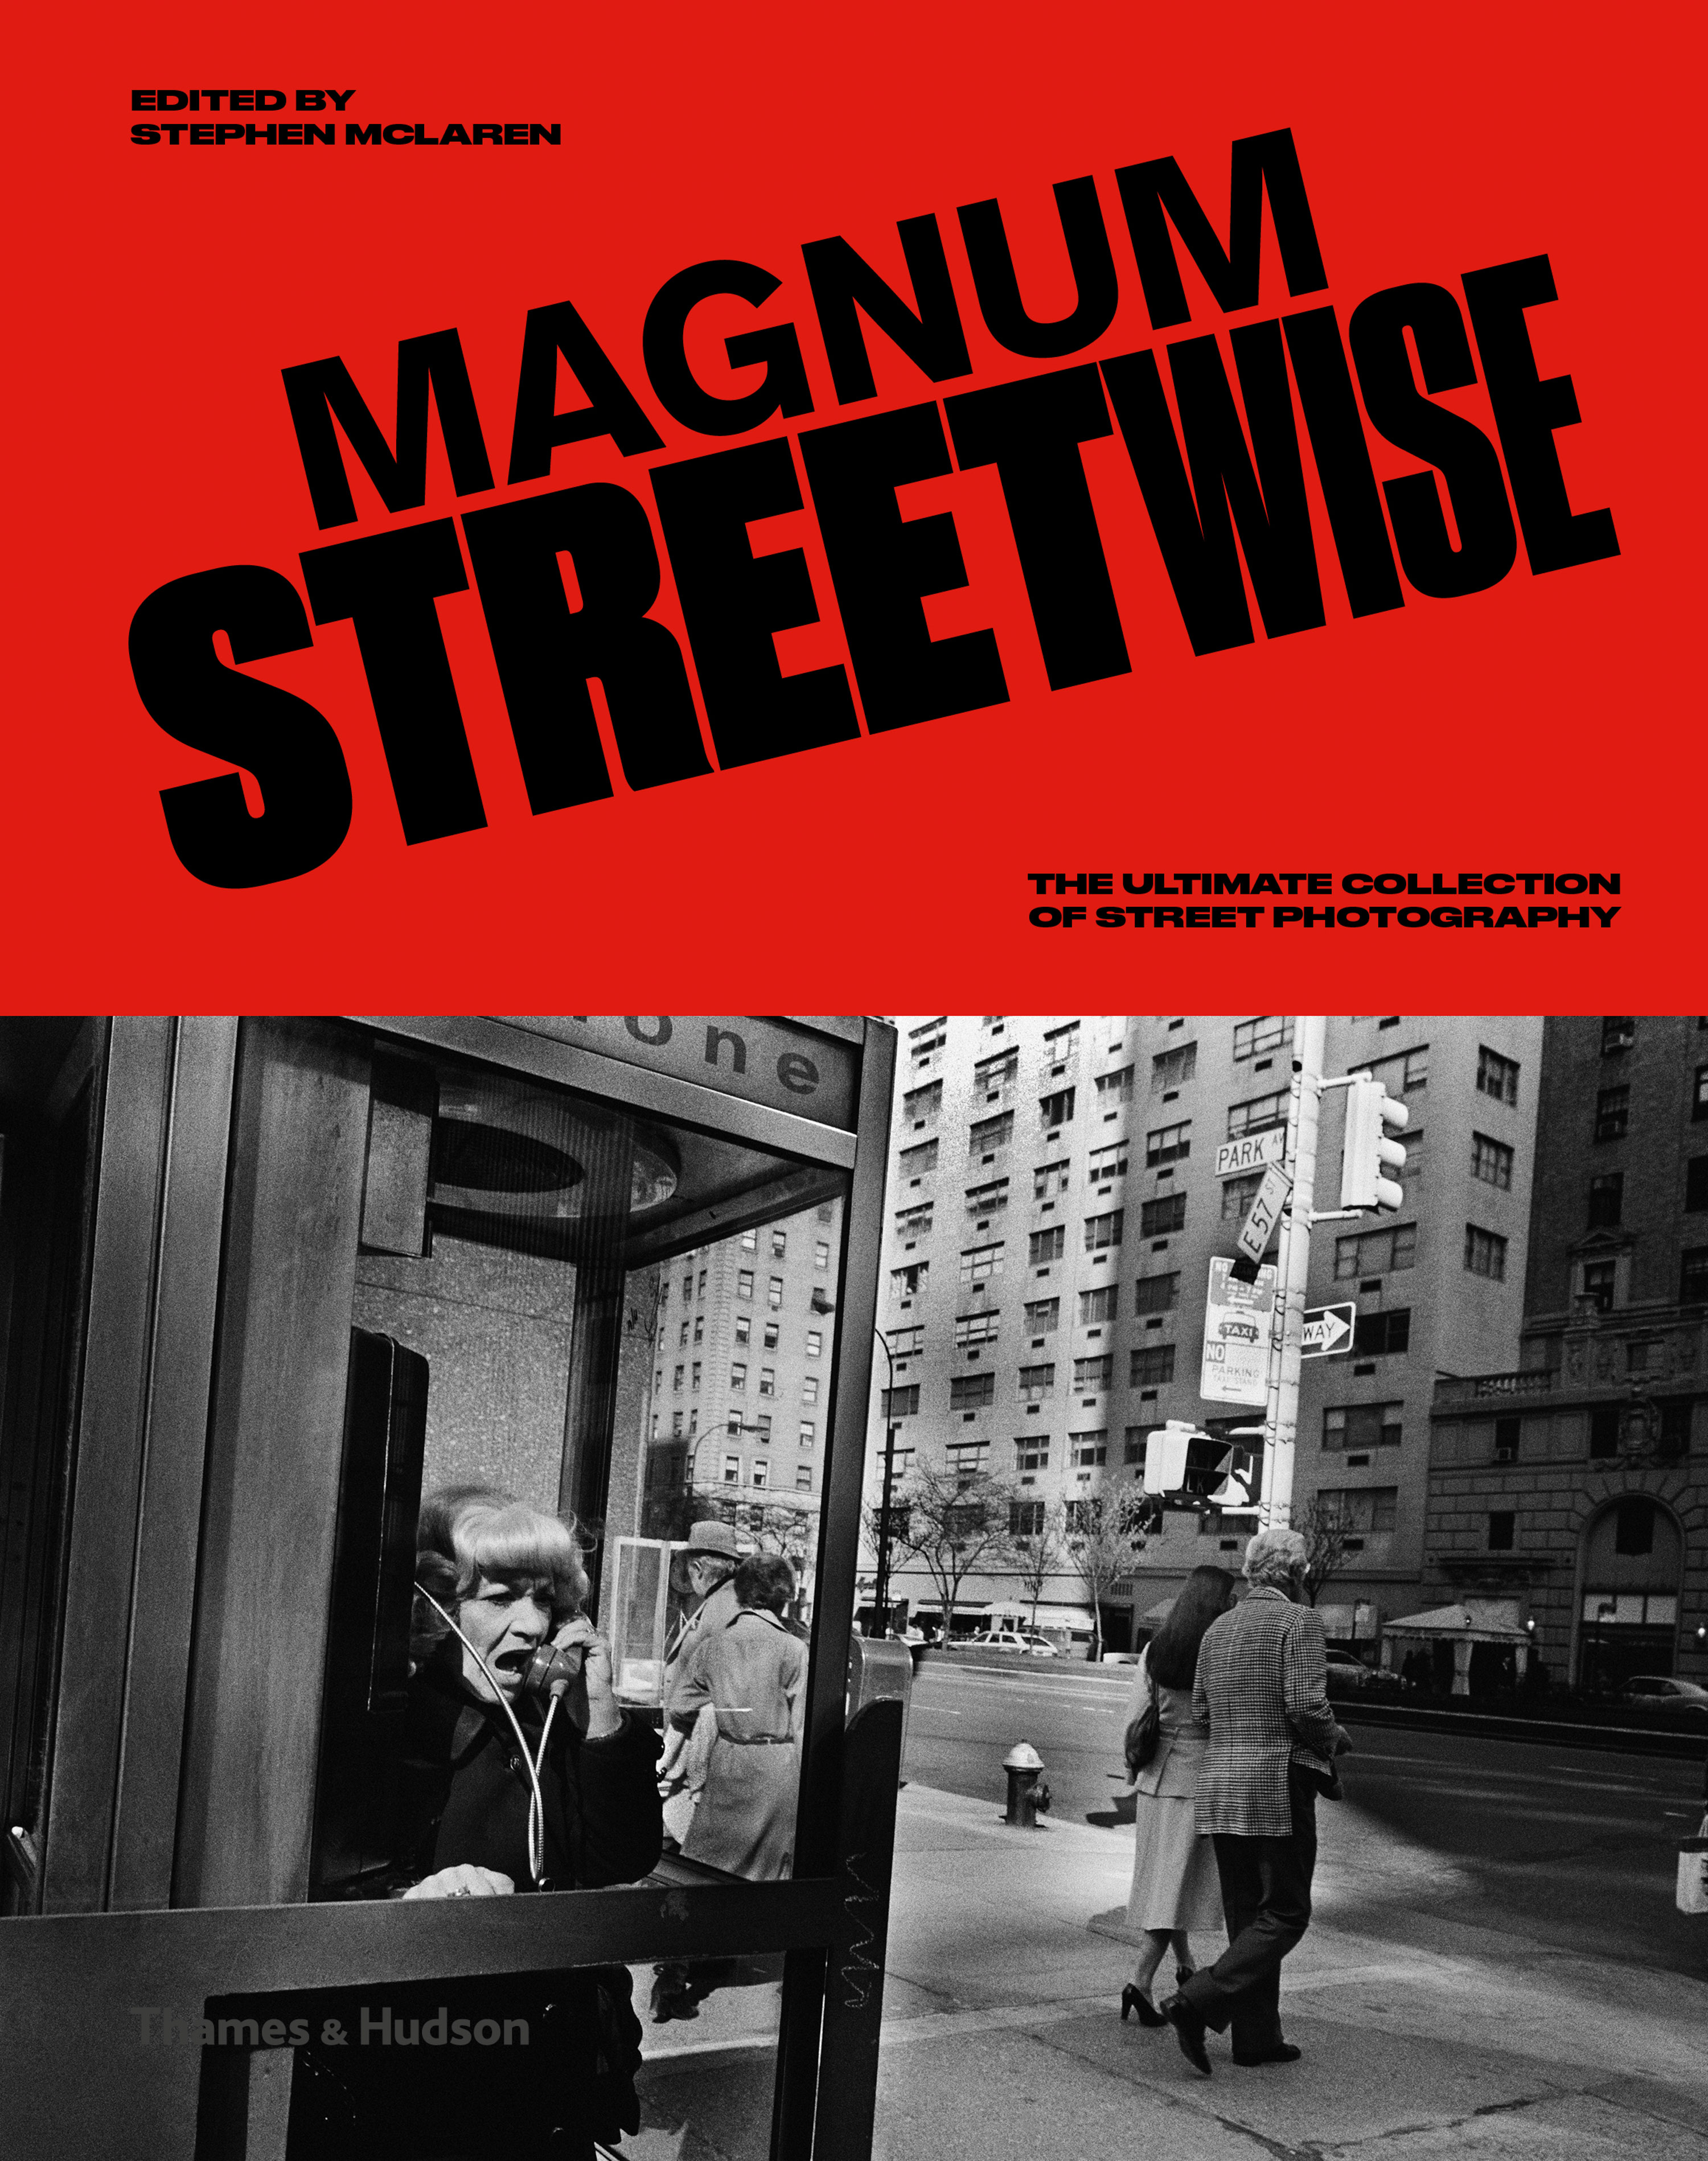 Magnum-Streetwise-9780500545072